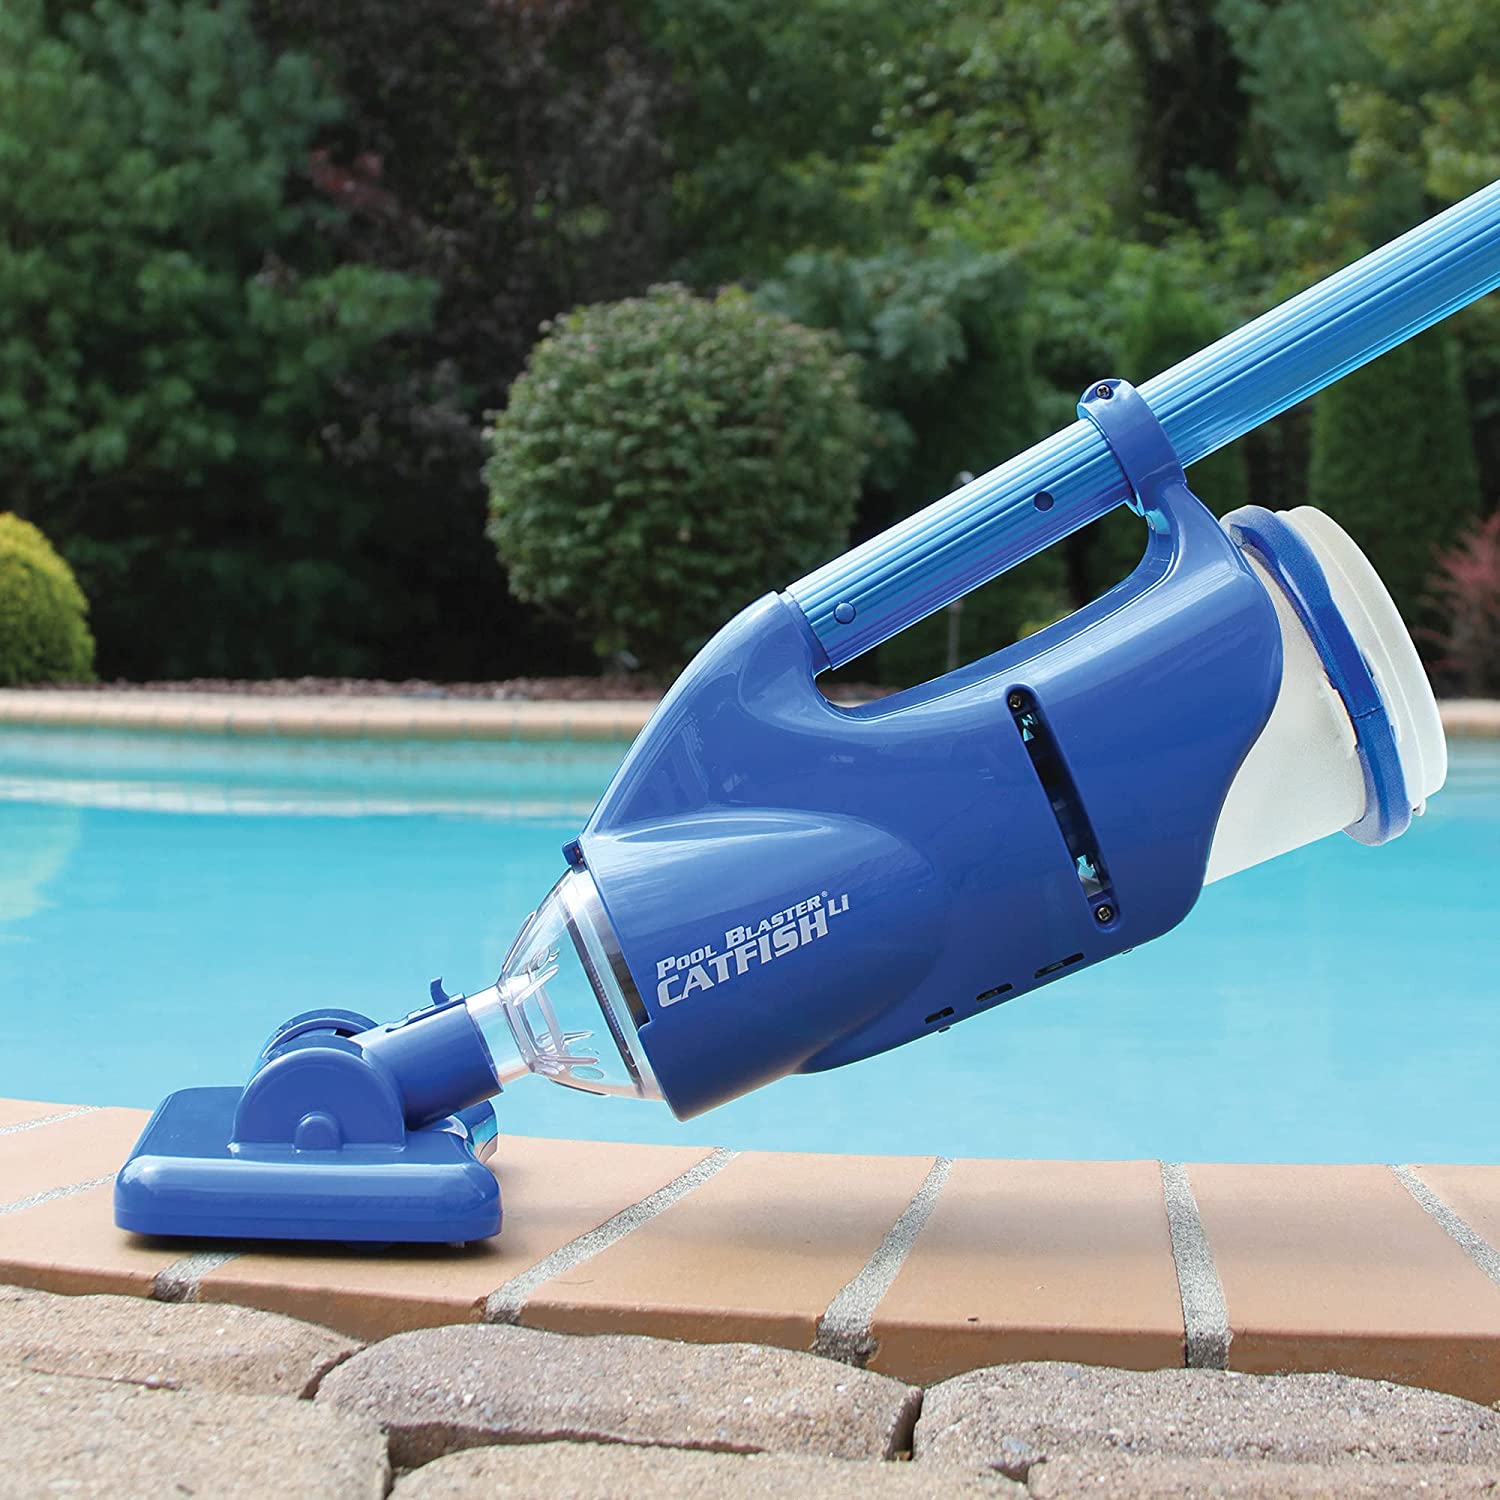 Pool Blaster CatFish Li Cordless Pool Vacuum Handheld Rechargeable Swimming Pool Cleaner